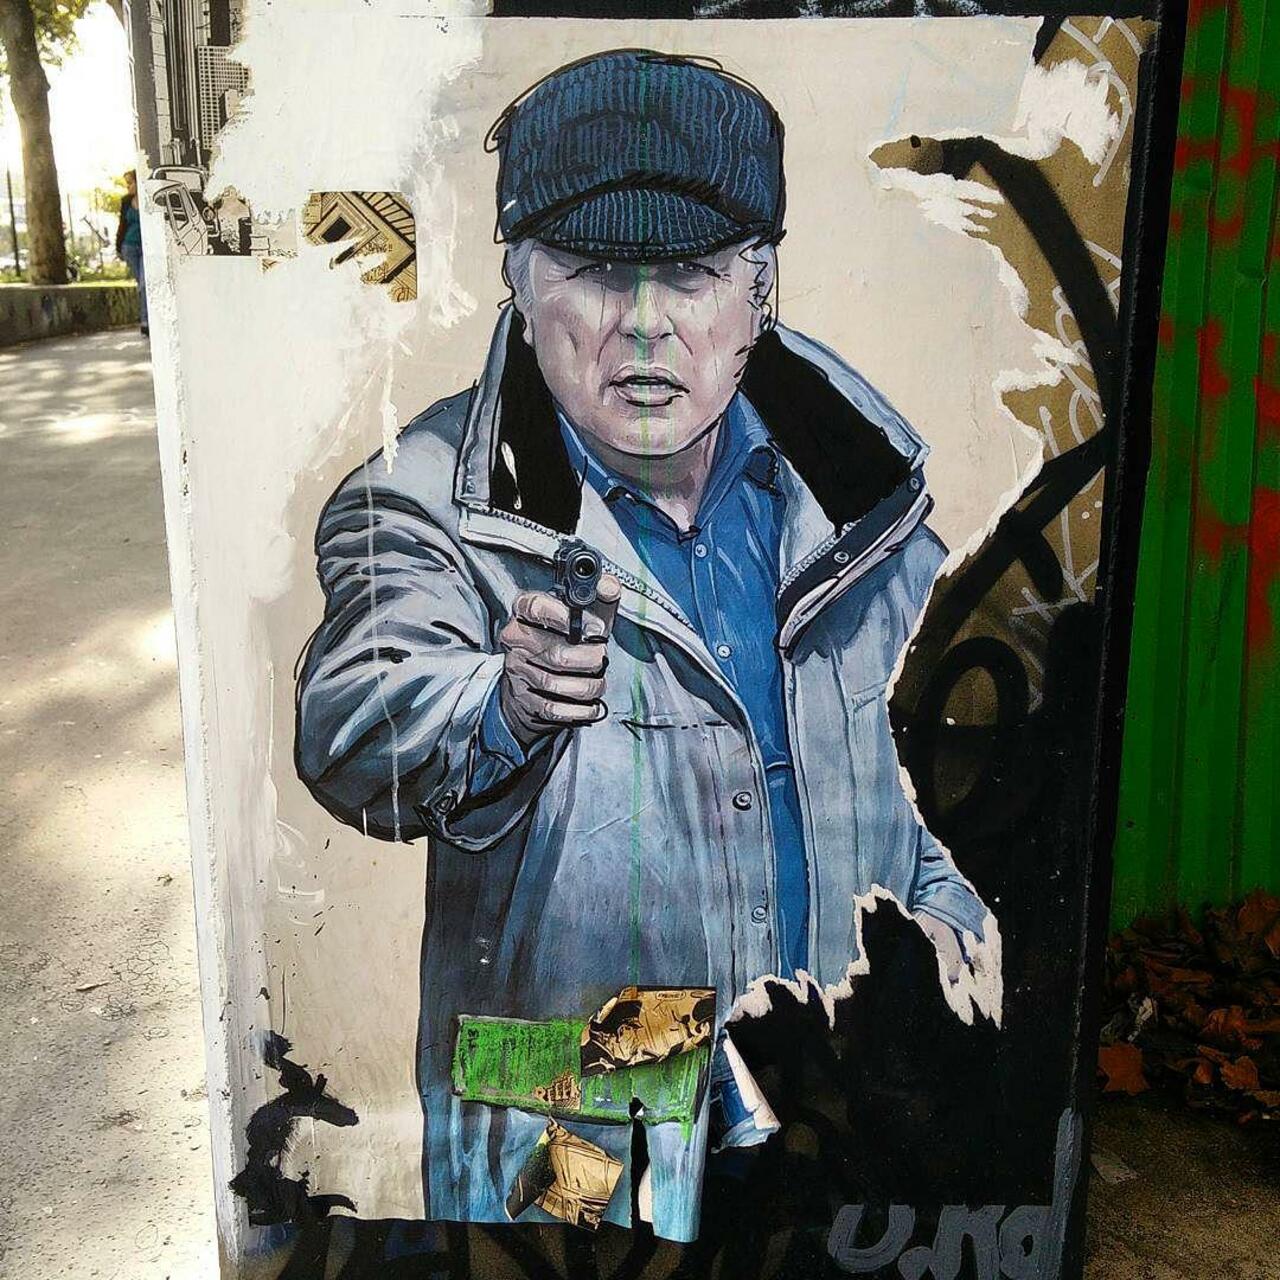 #Paris #graffiti photo by @ceky_art http://ift.tt/1kdEs1g #StreetArt http://t.co/f9Nza9HmIf